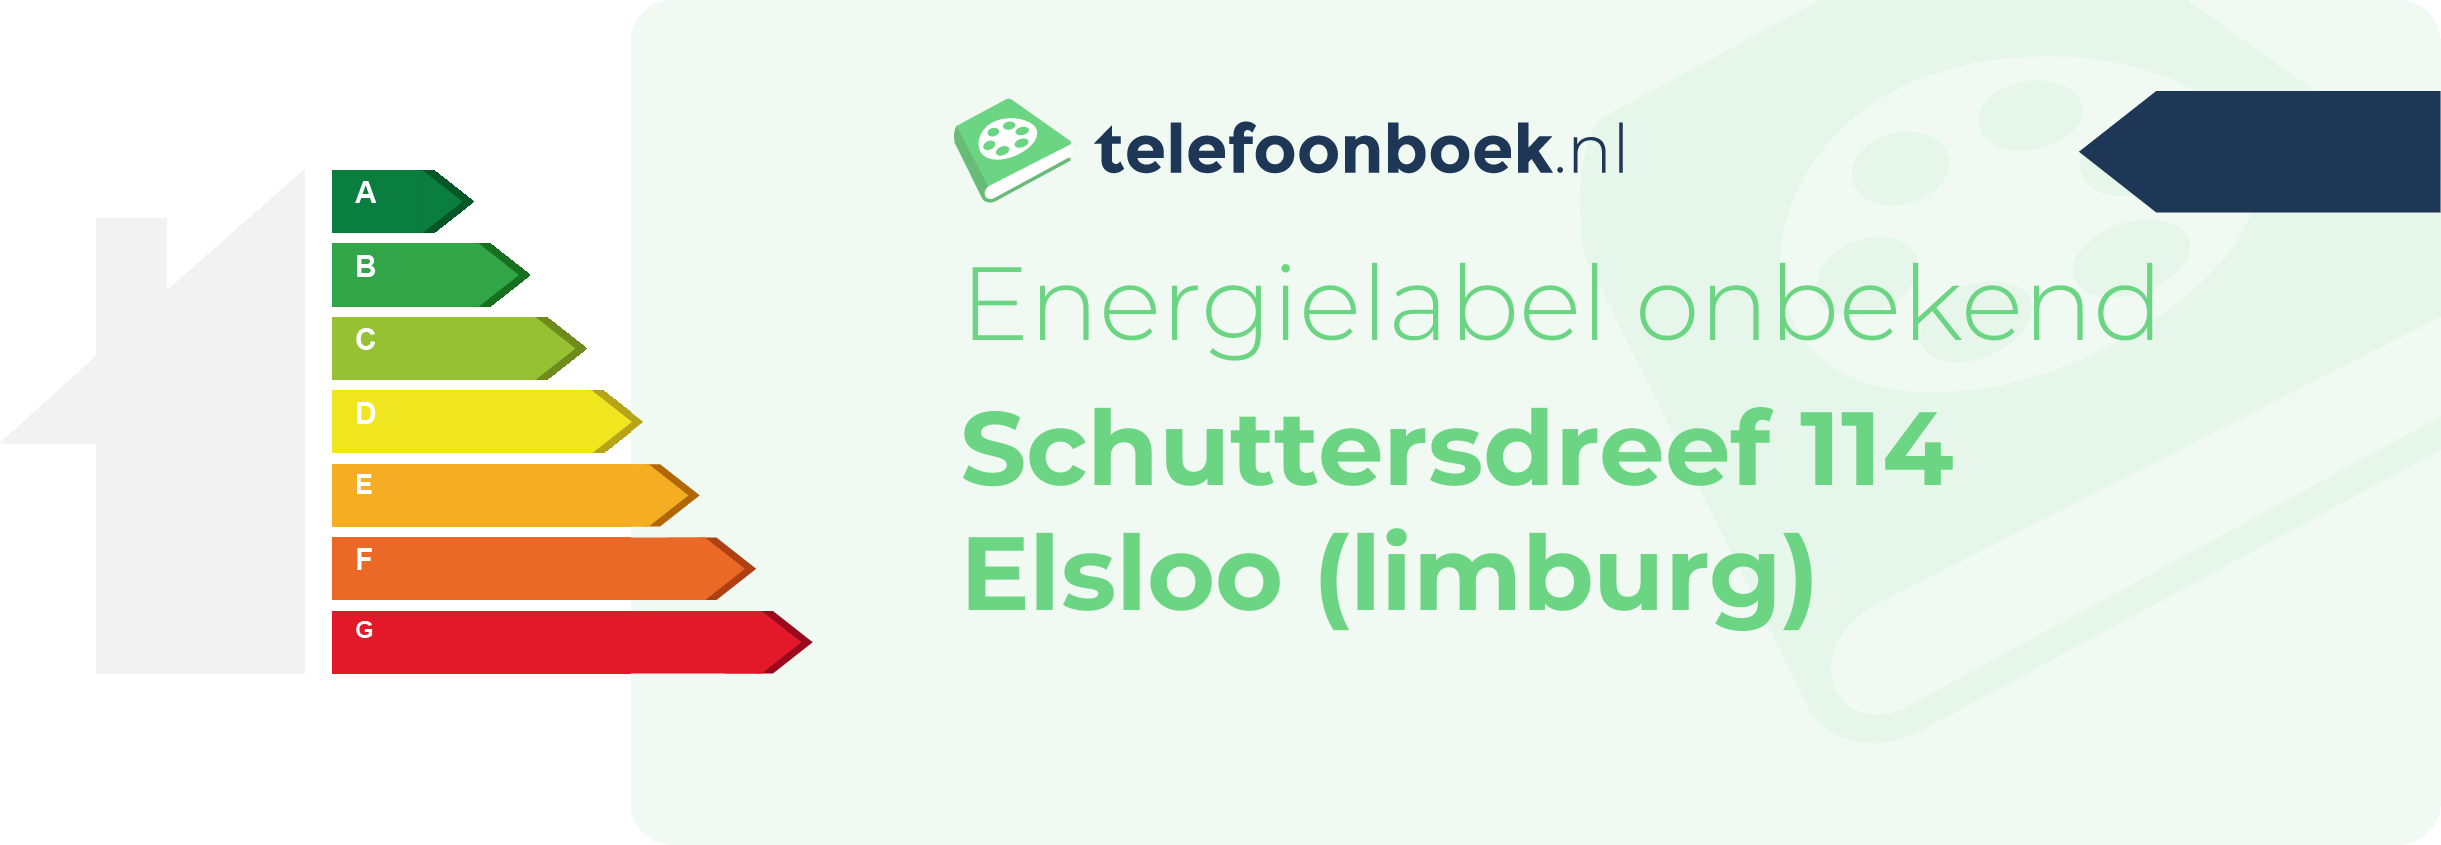 Energielabel Schuttersdreef 114 Elsloo (Limburg)